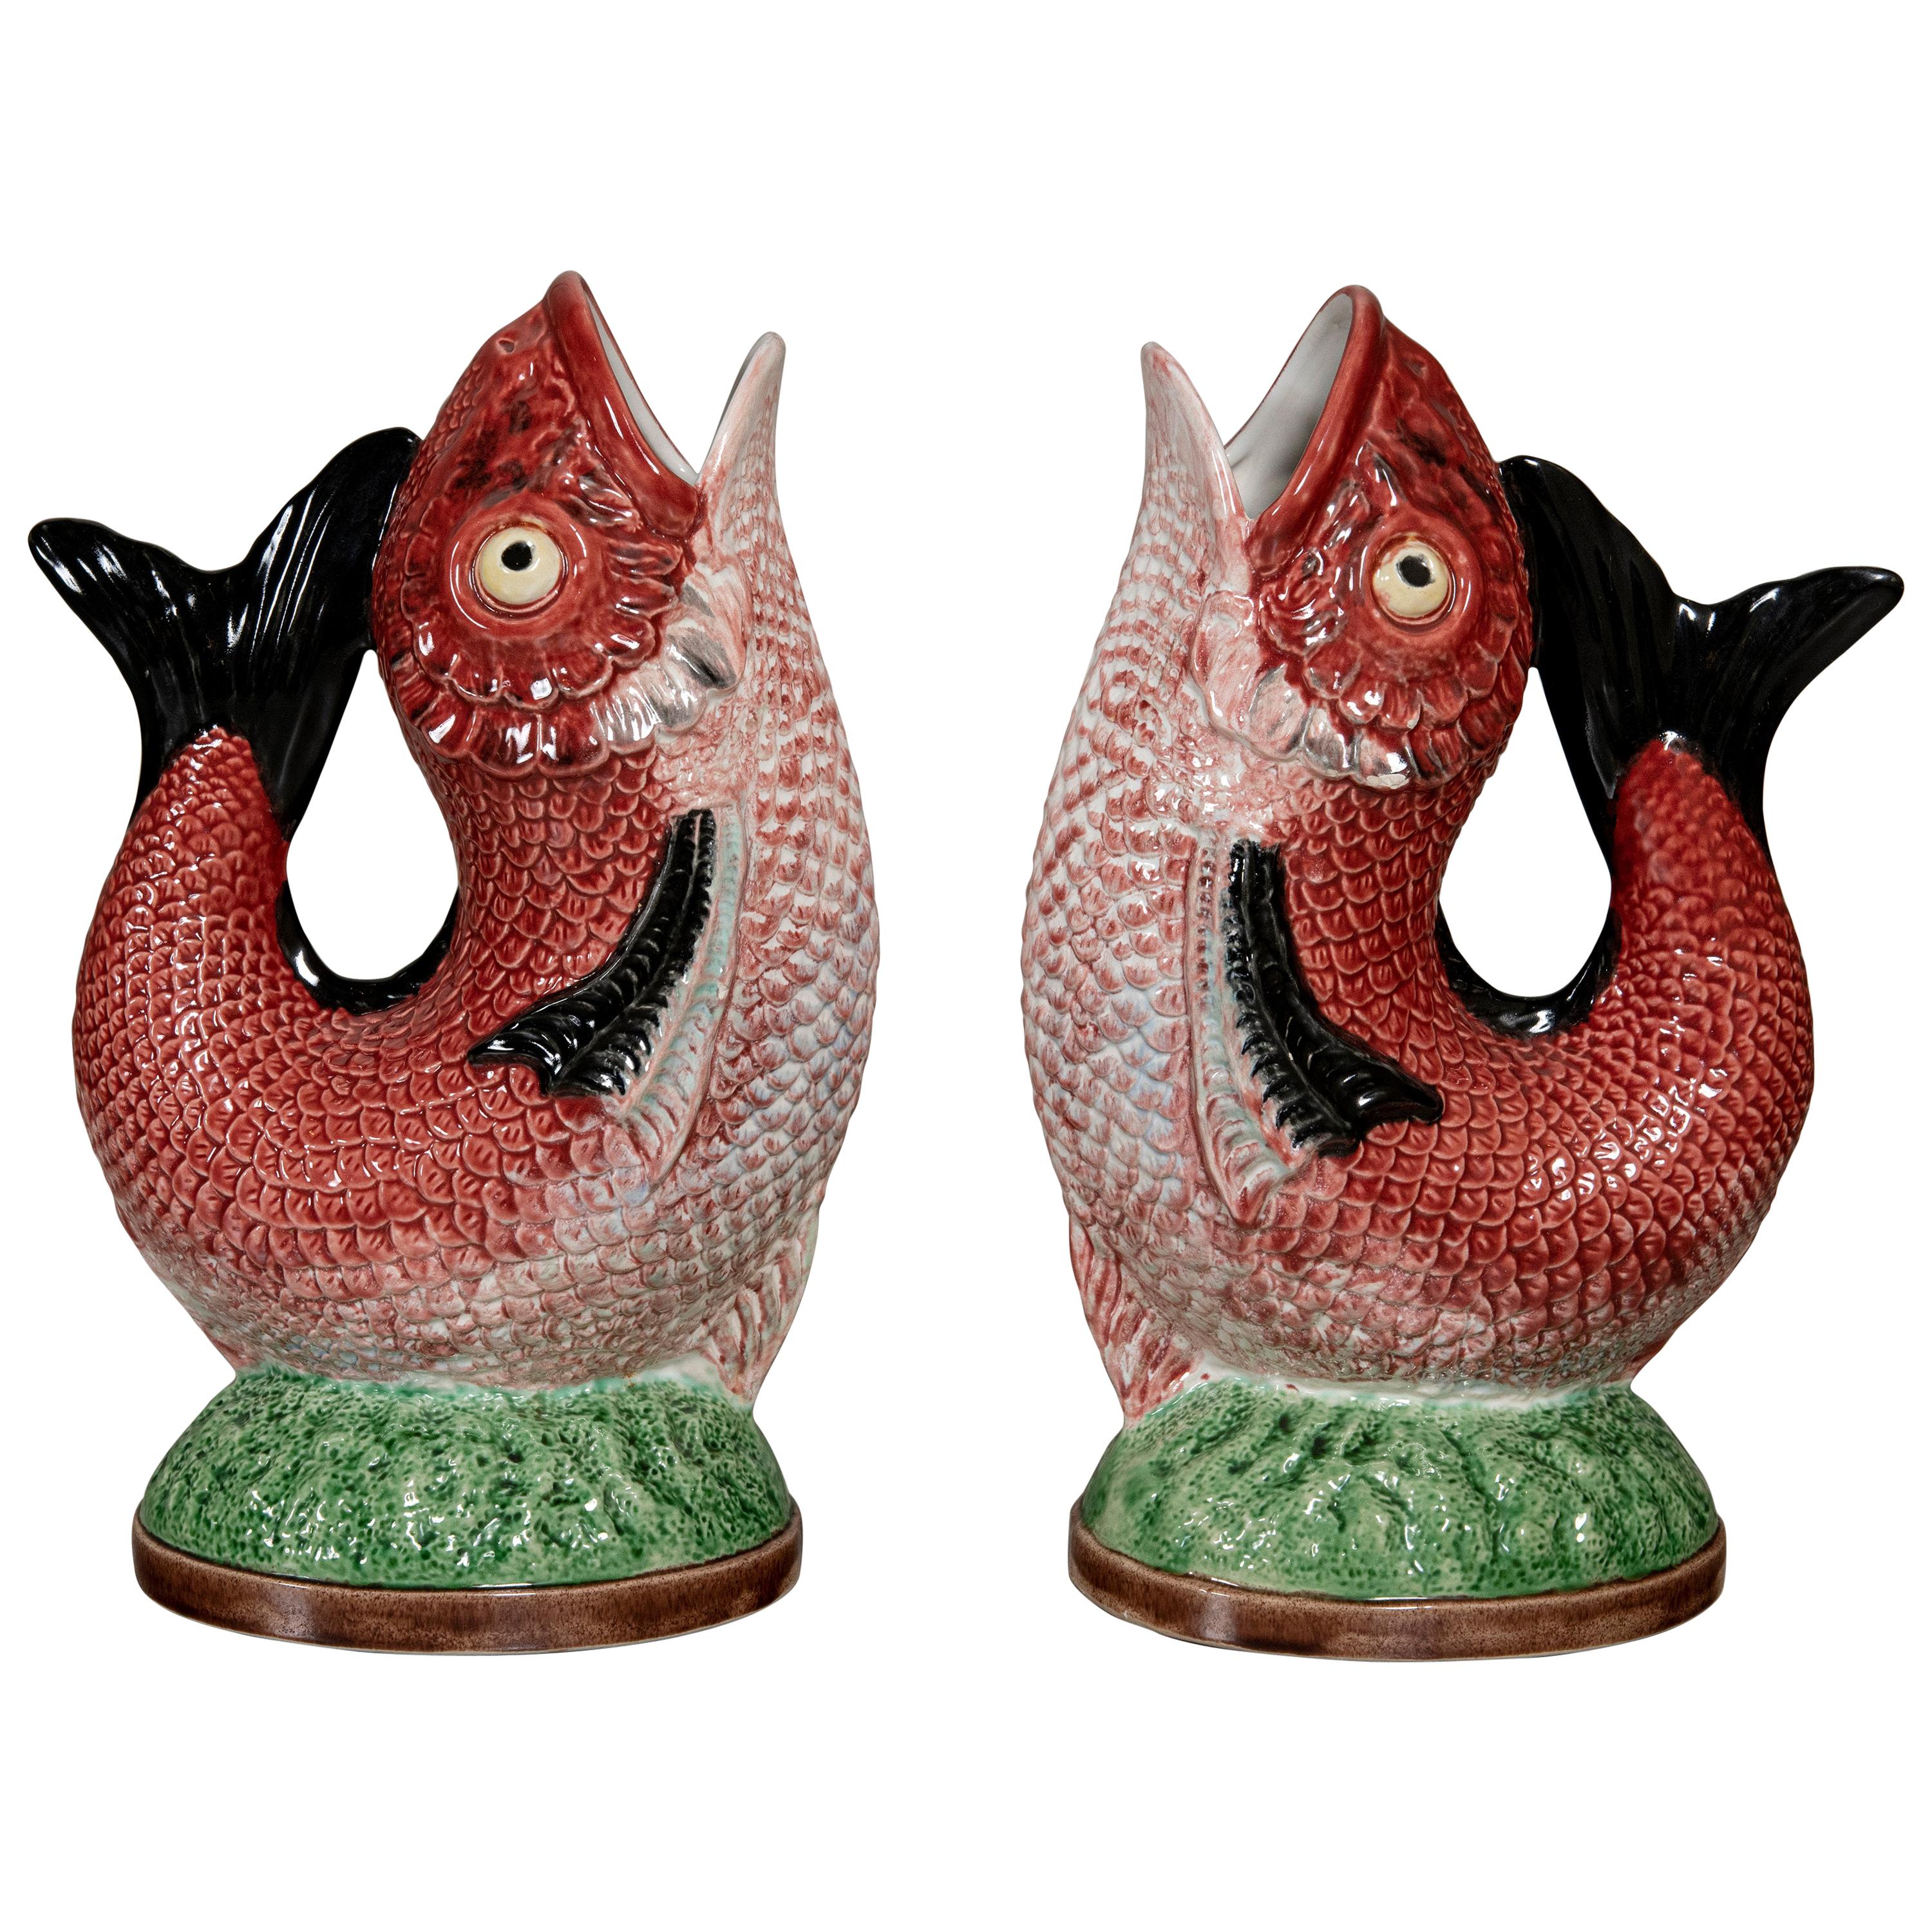 Pair of Painted Ceramic Fish Pitchers by Bordallo Pinheiro, Portugal, circa 1900